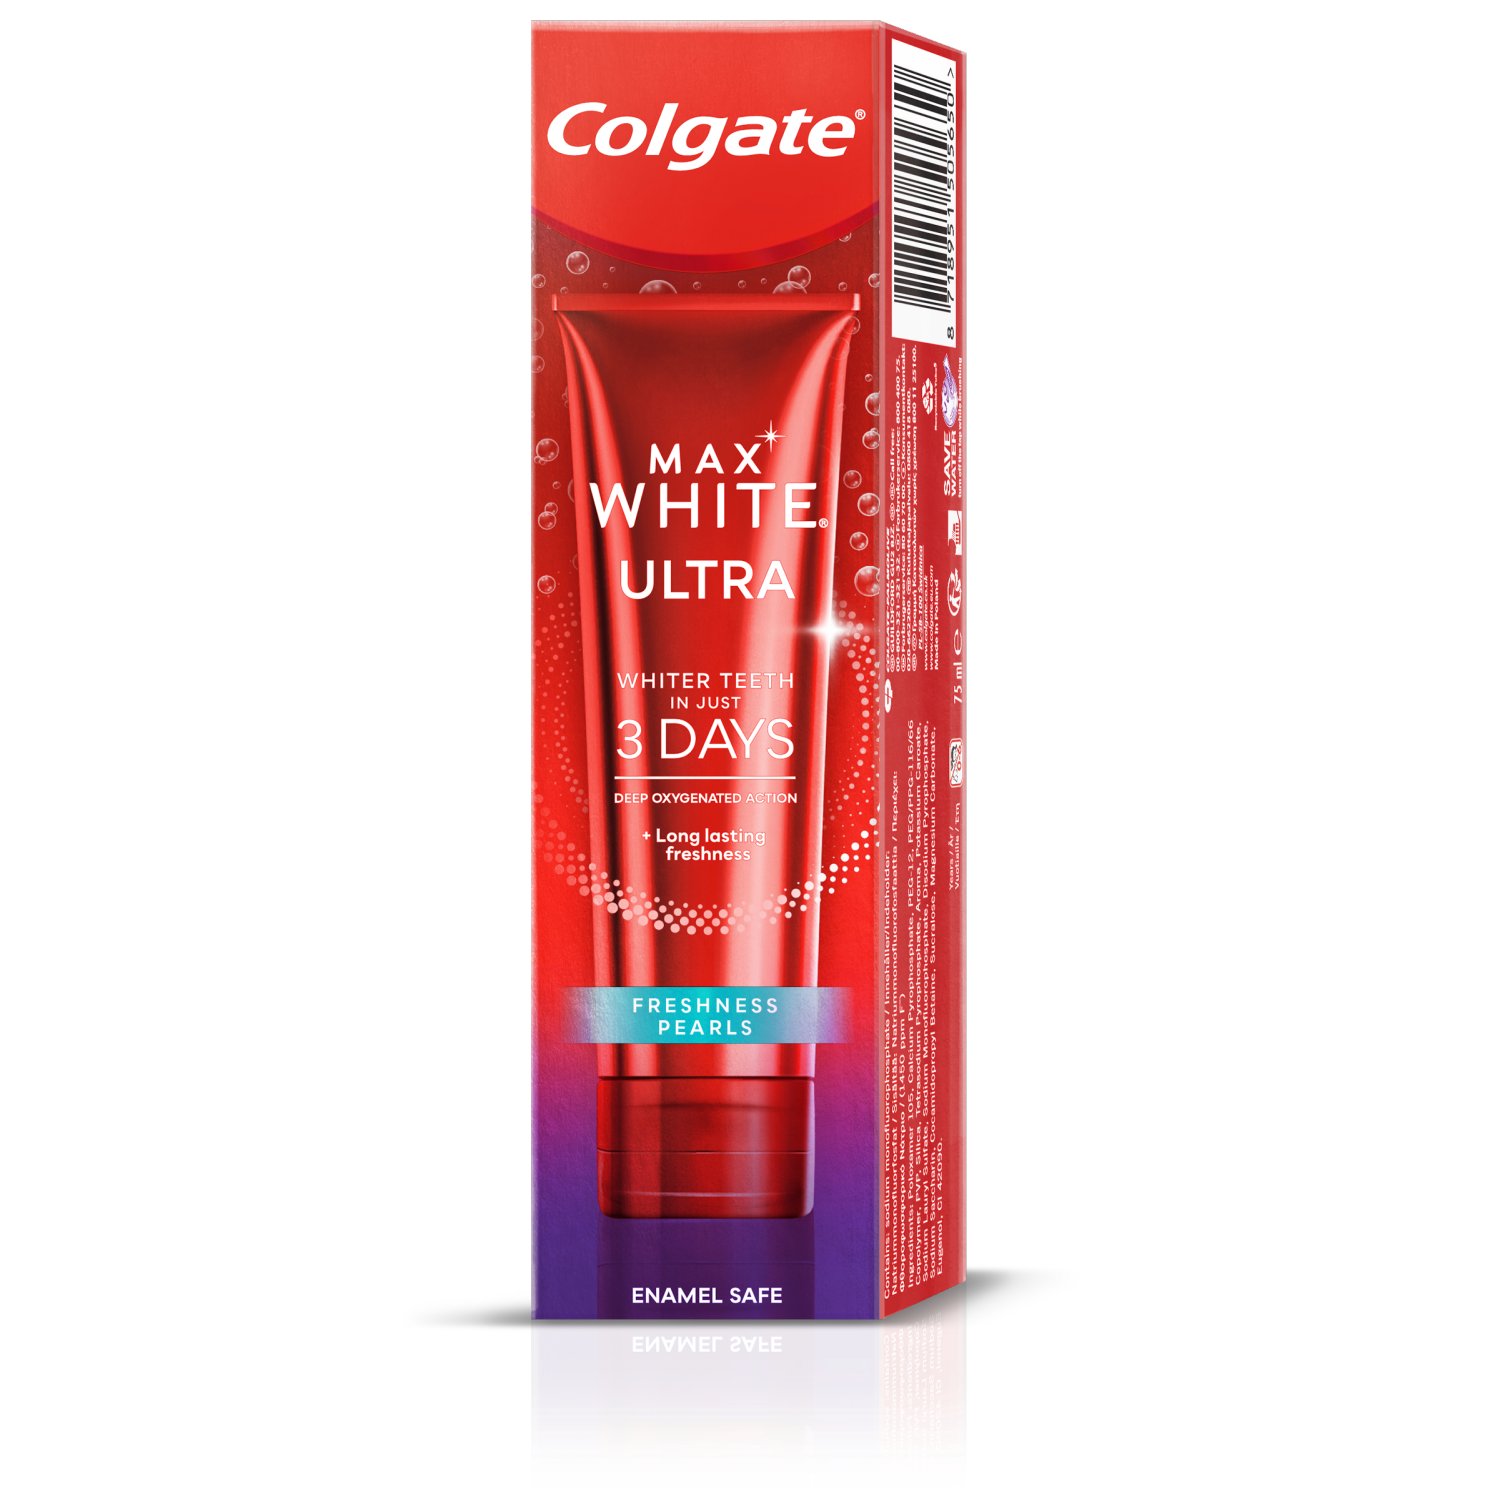 Colgate Max White Ultra Fresh Pearls Whitening Toothpaste (75 ml)